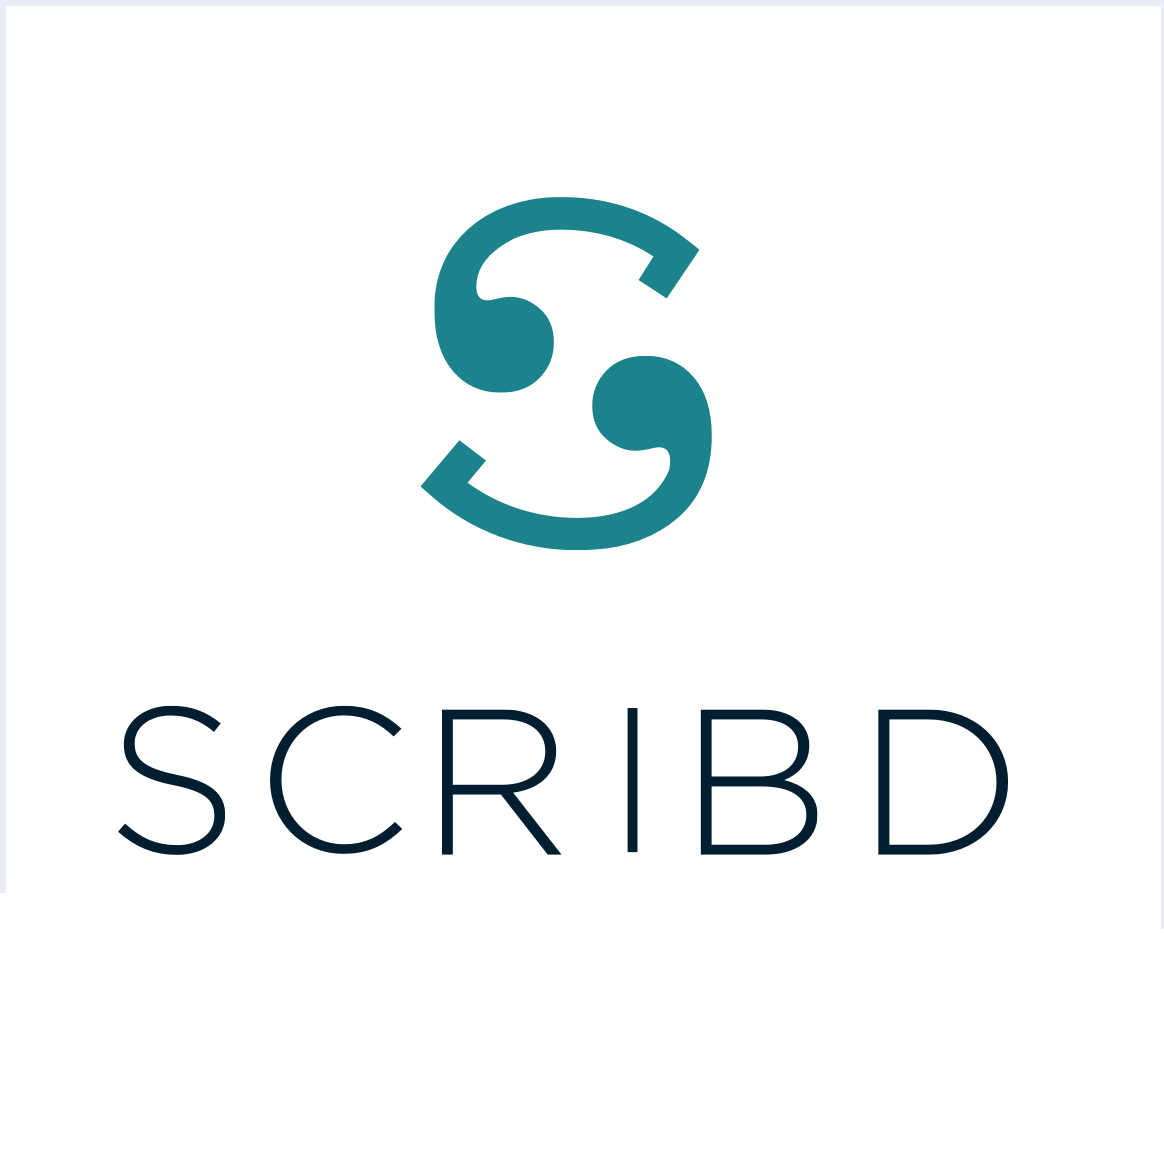 Scribd logo